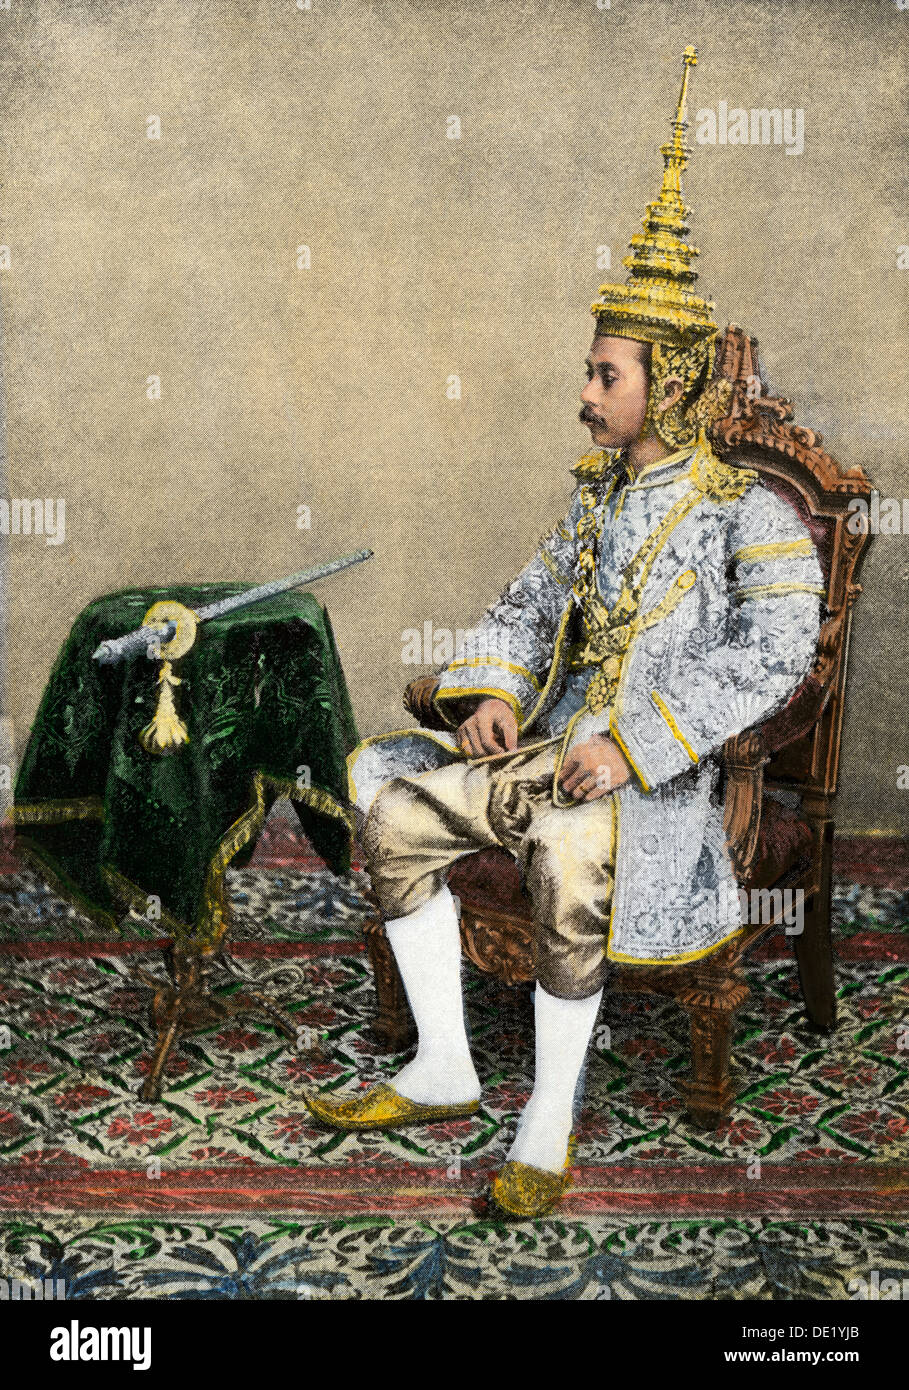 Rama V (Chulalongkorn), King of Siam, in his royal attire, circa 1900. Hand-colored halftone reproduction of a photograph Stock Photo